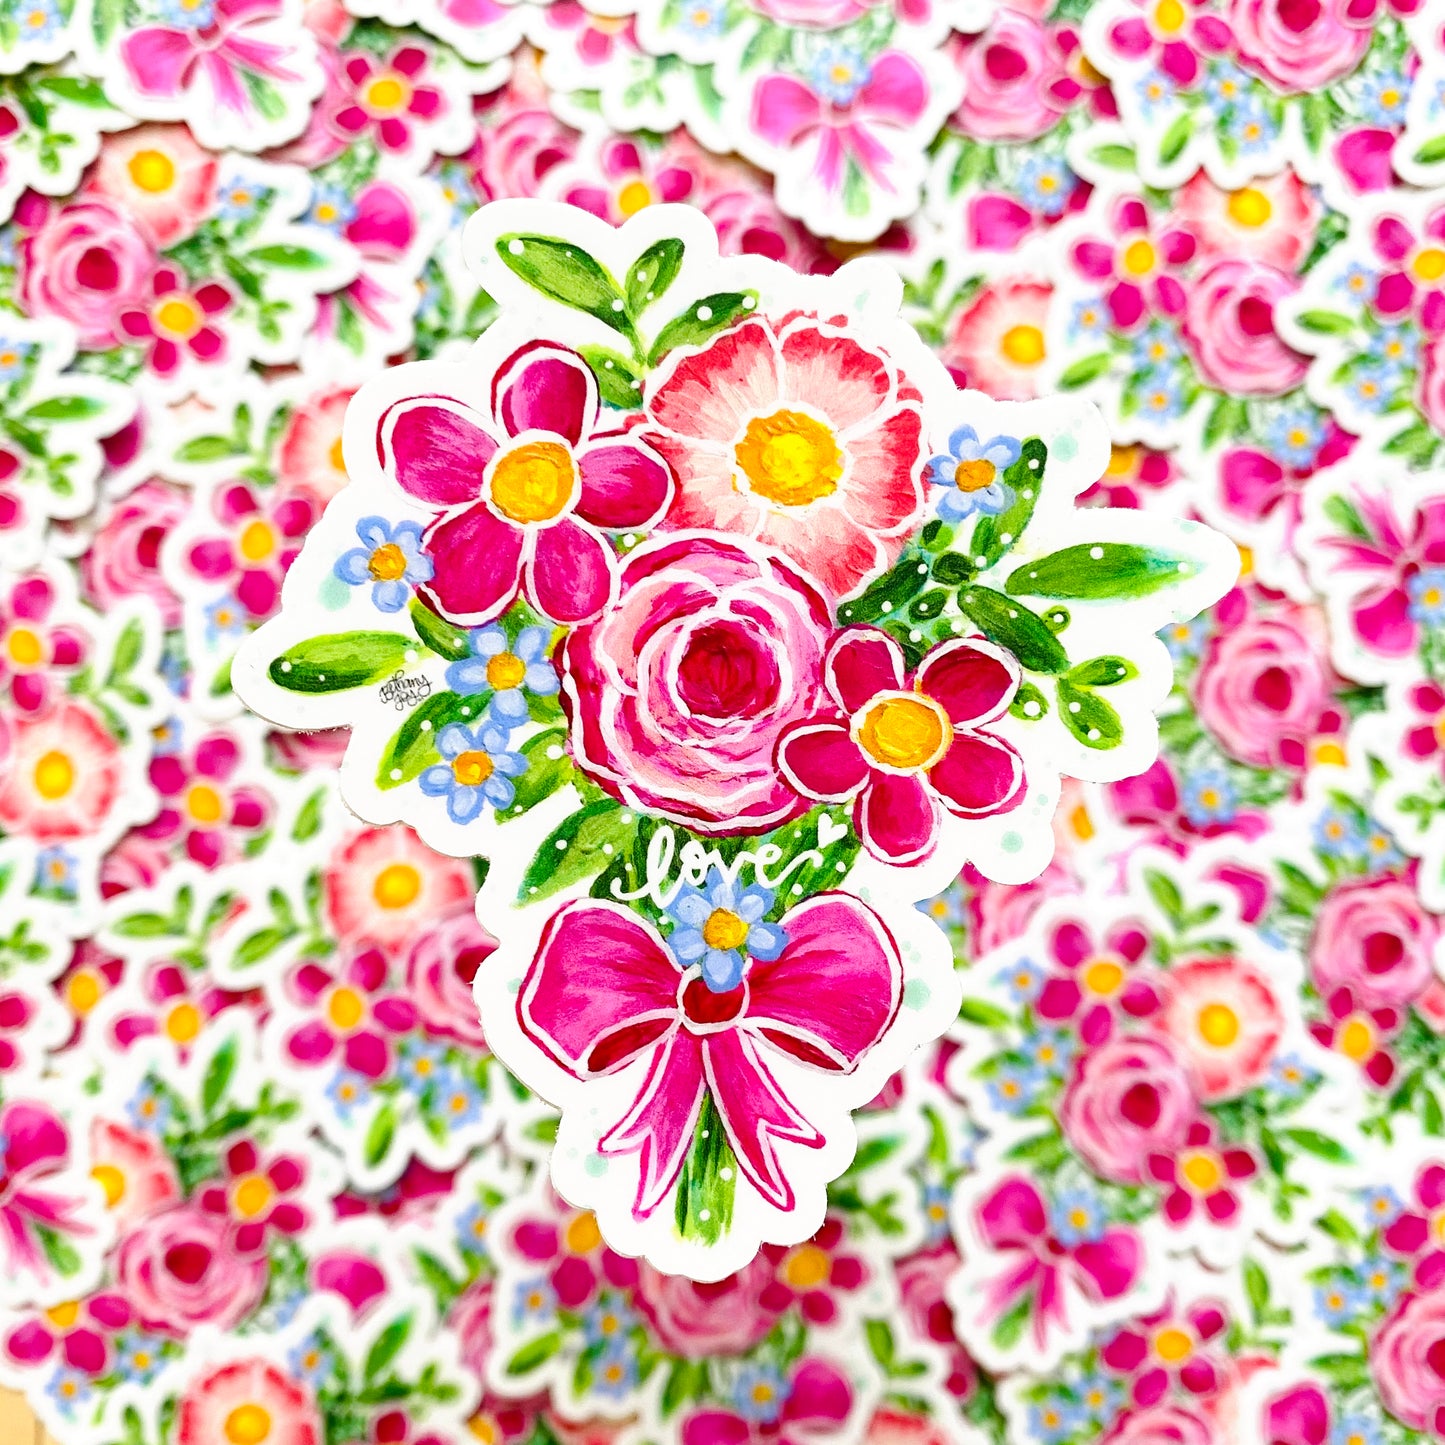 Love Bouquet Vinyl Sticker - February 2021 Sticker of the Month